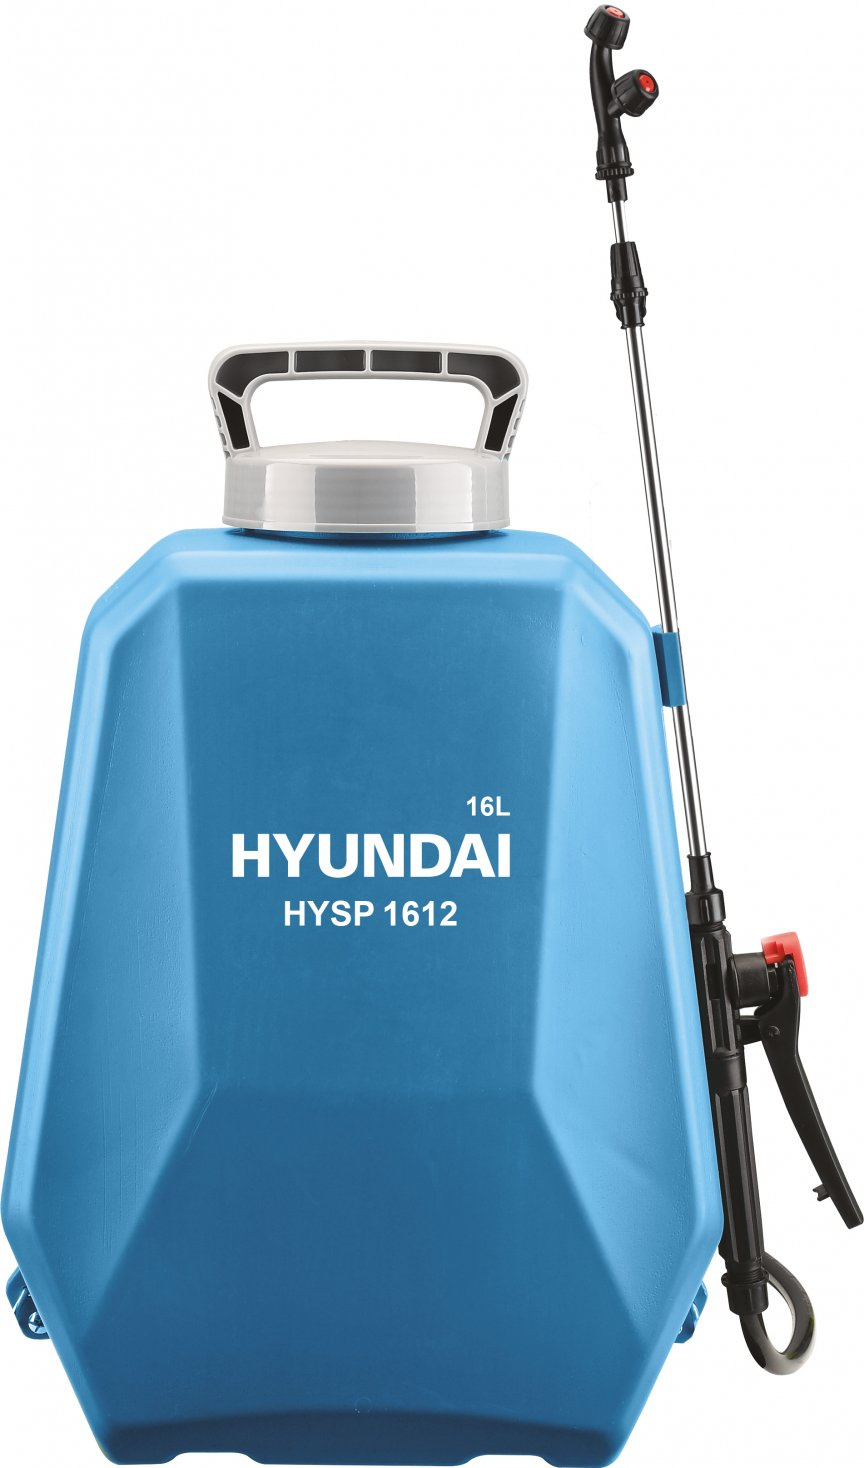 Опрыскиватель Hyundai HYSP 1612 аккум. ранц. 16л голубой/серый